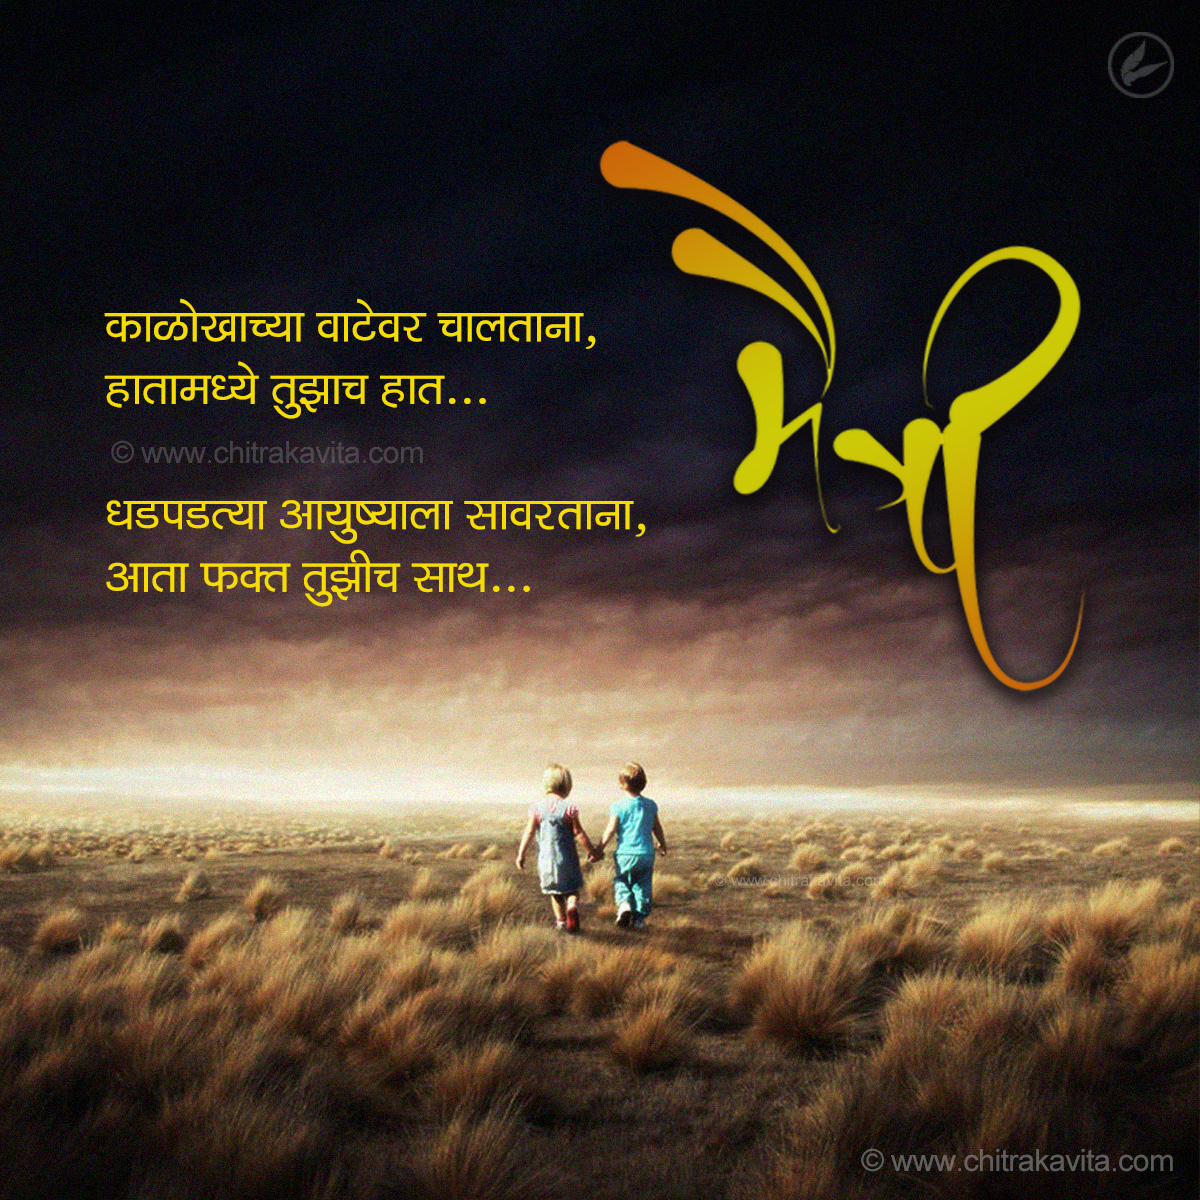 marathi friendship greetings, maitri, friendship, friendship day, marathi maitri kavita